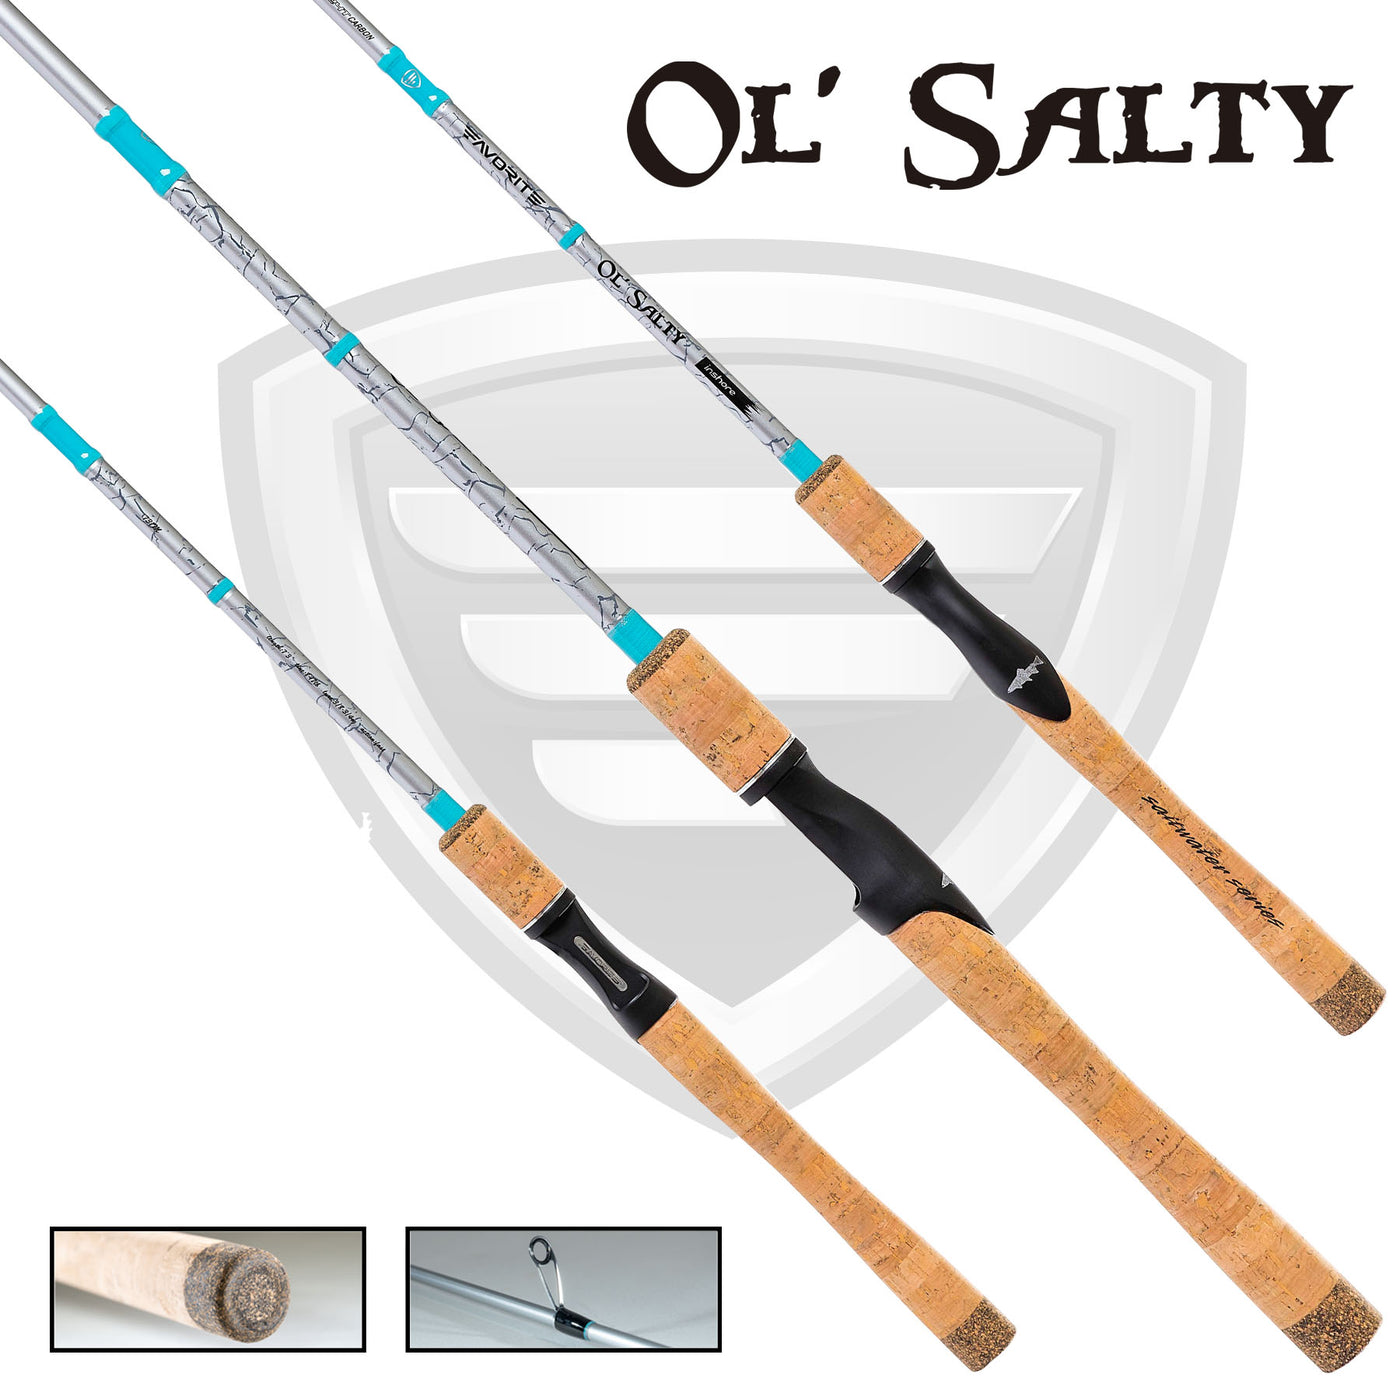 Favorite Ol' Salty Spinning Rod - OLS-781H